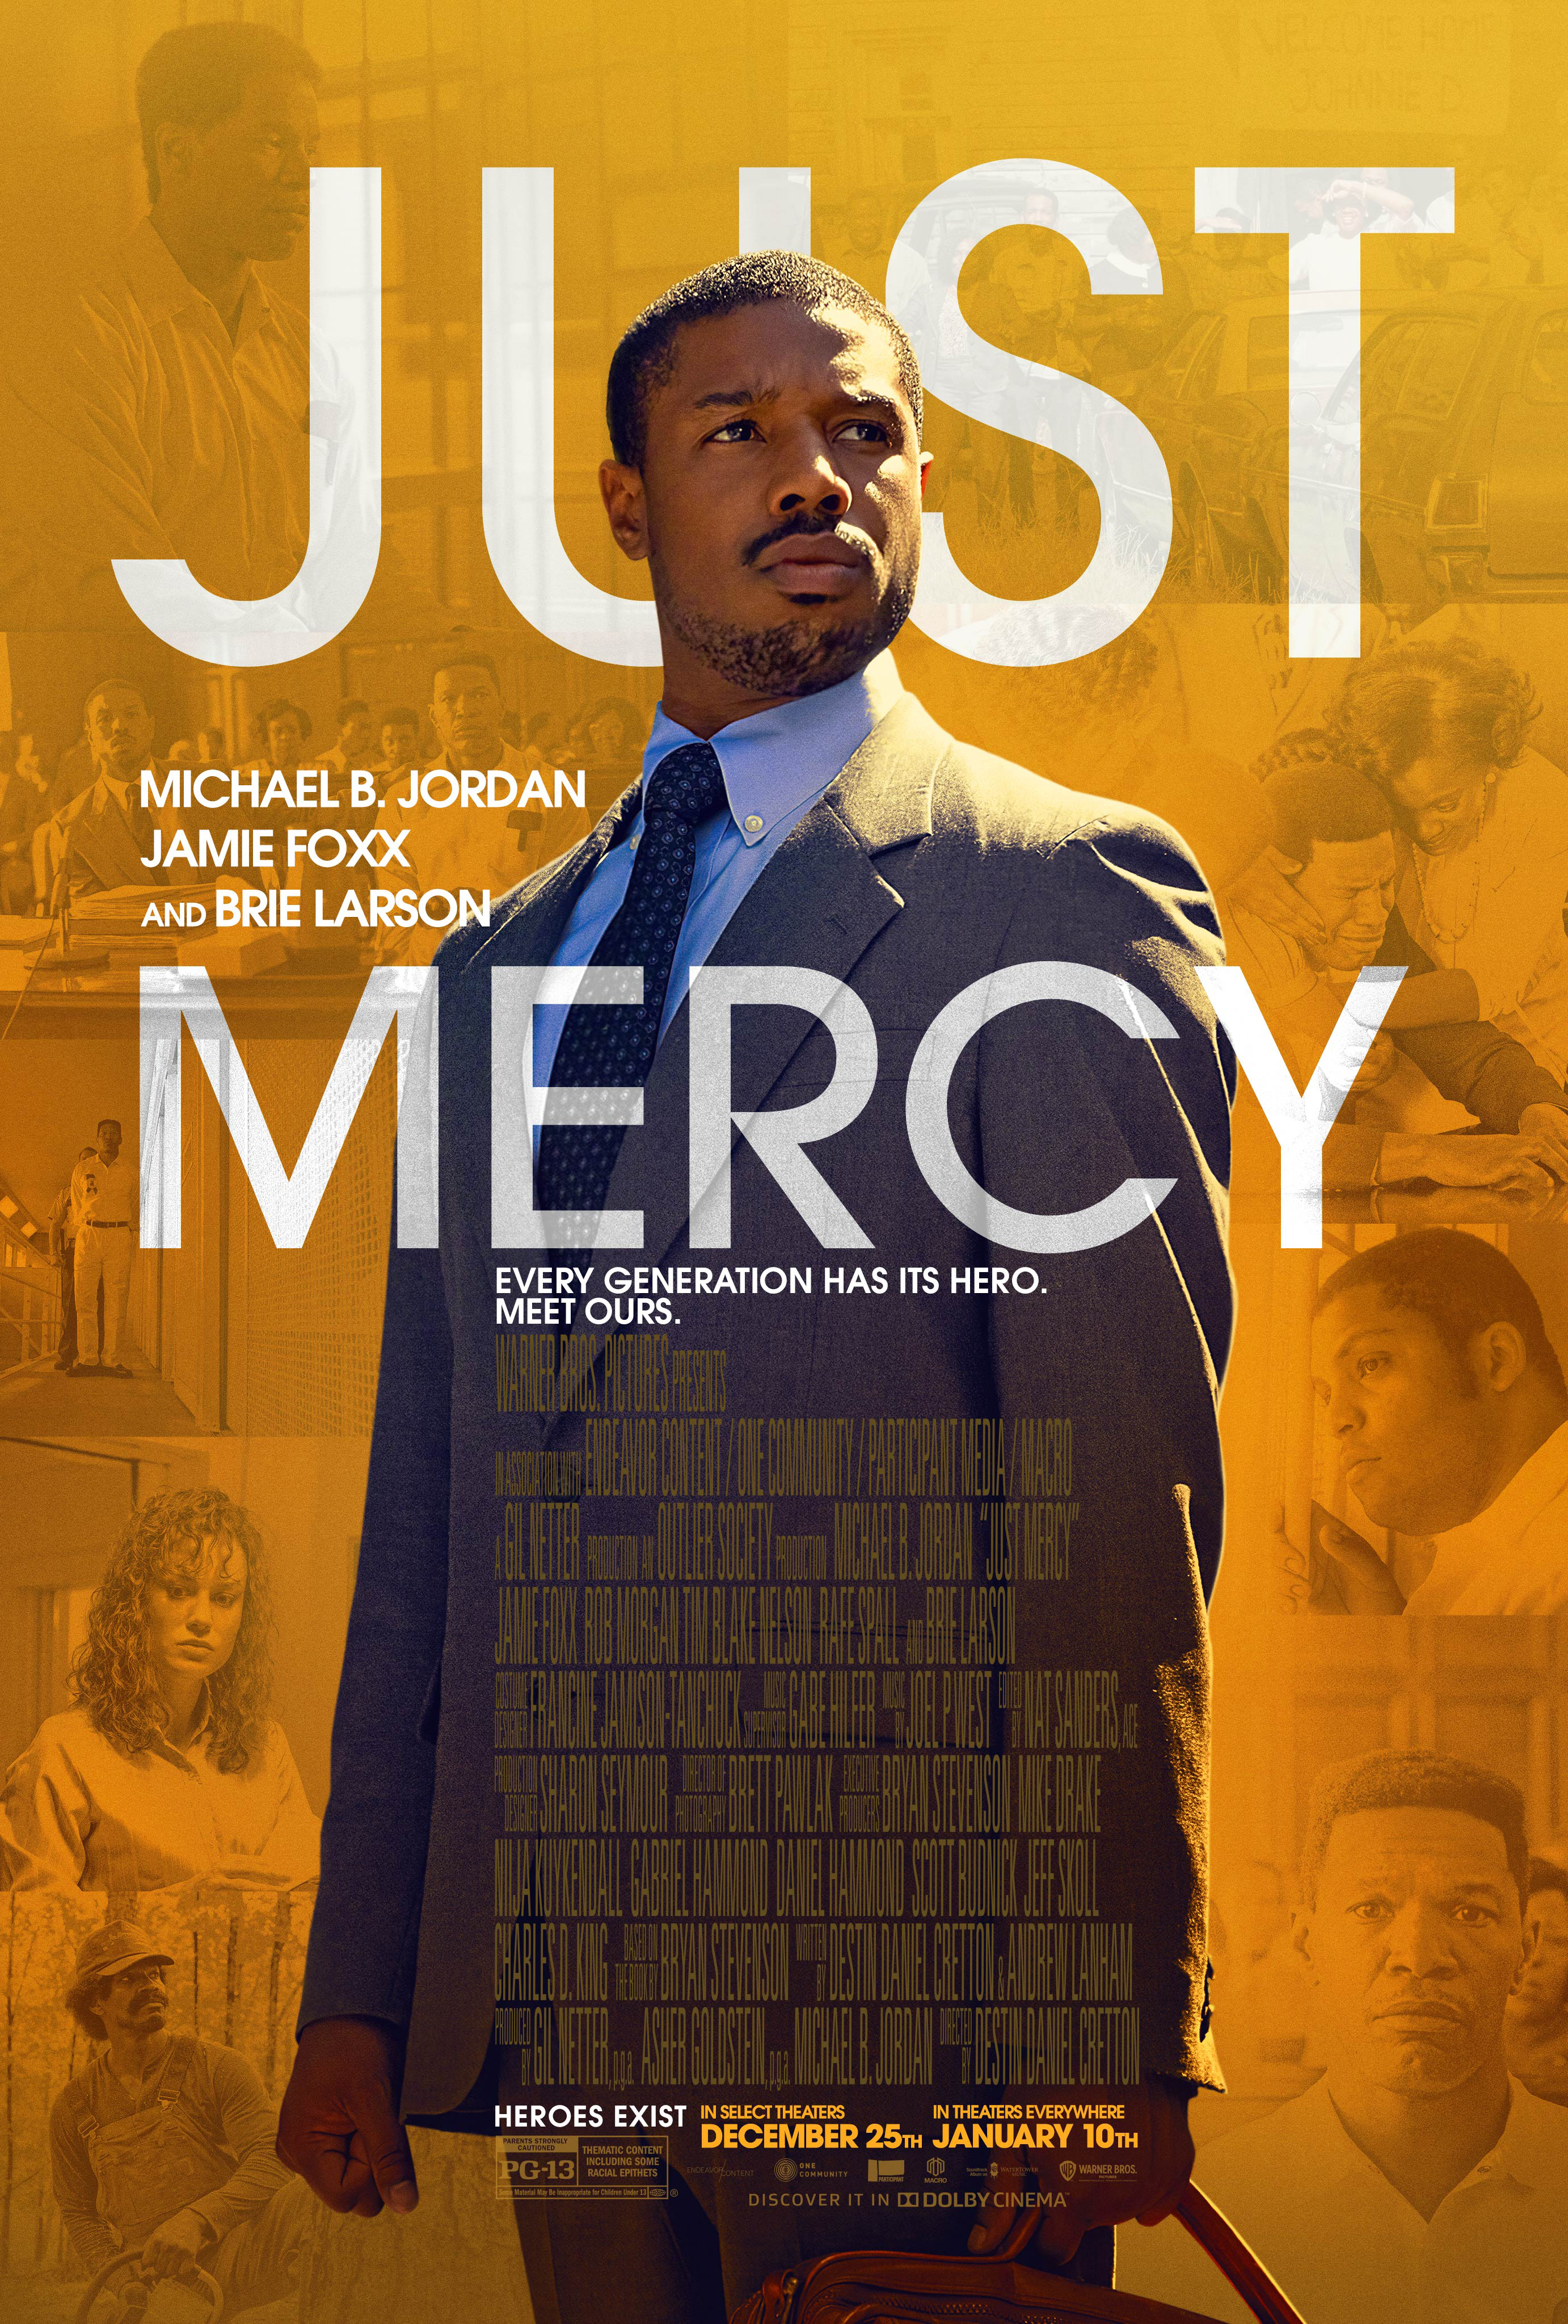 Poster for film Just Mercy, Michael B. Jordan in suit looking serious